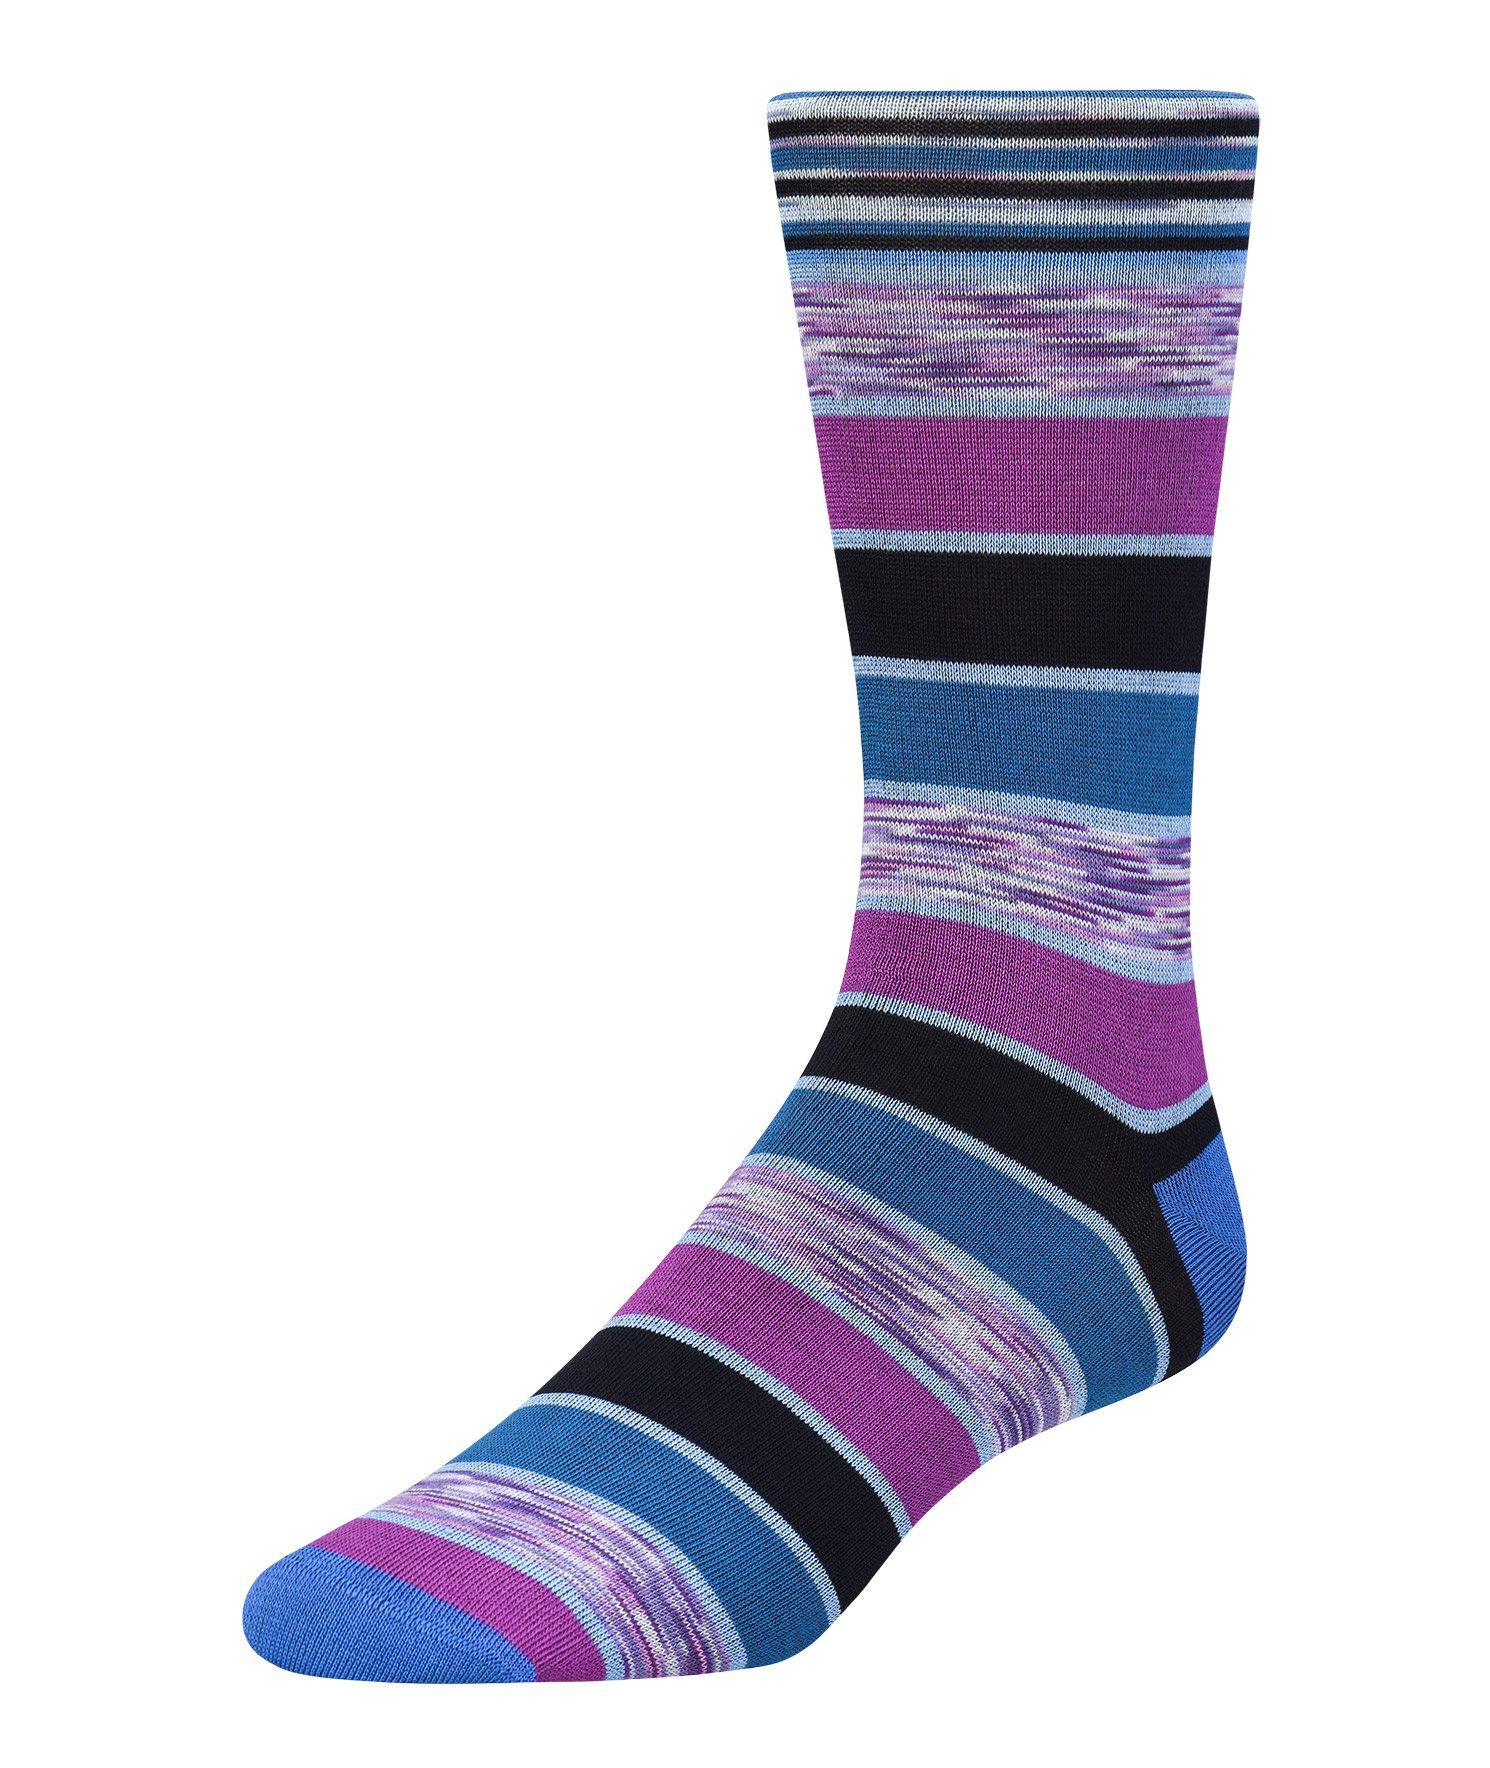 Mercerized Cotton Socks image 0